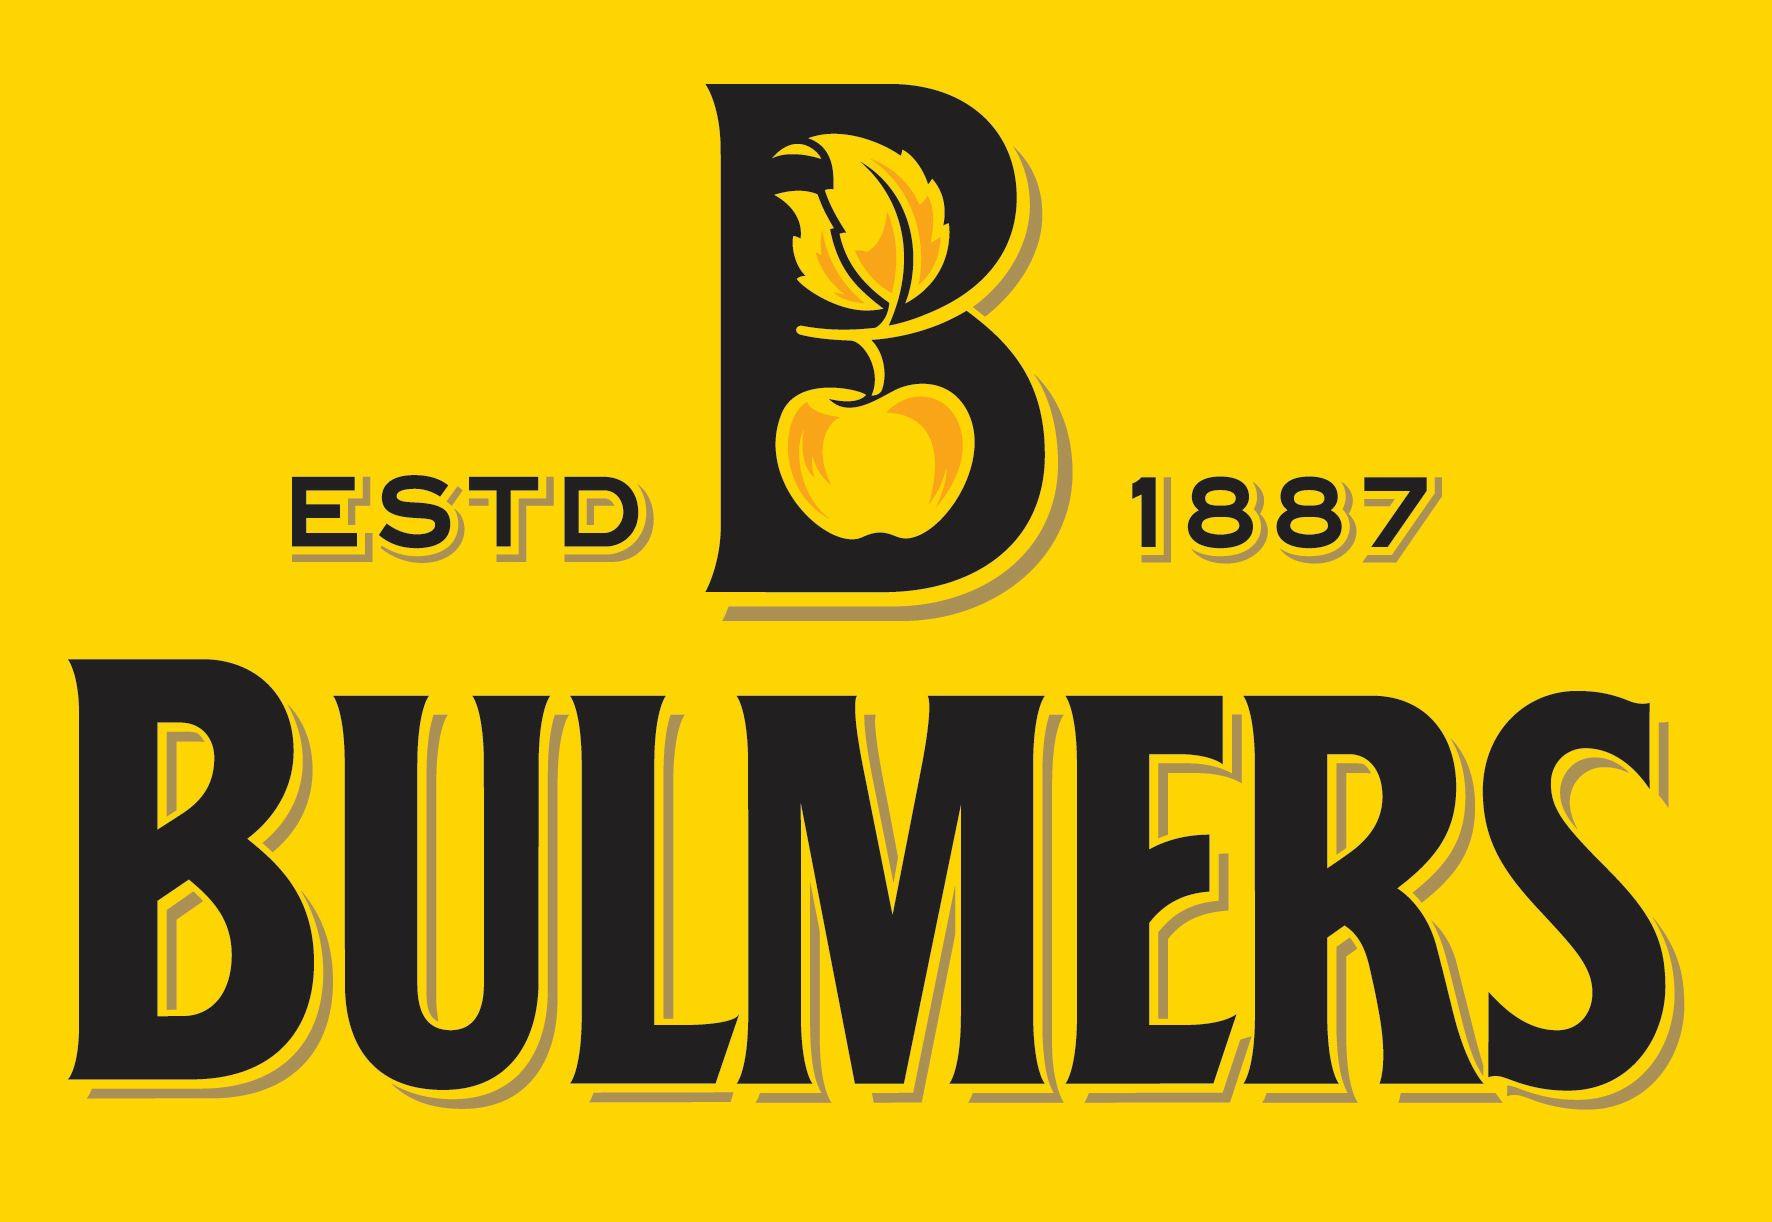 Cider Logo - File:Bulmers-Cider-Logo.jpg - Wikimedia Commons